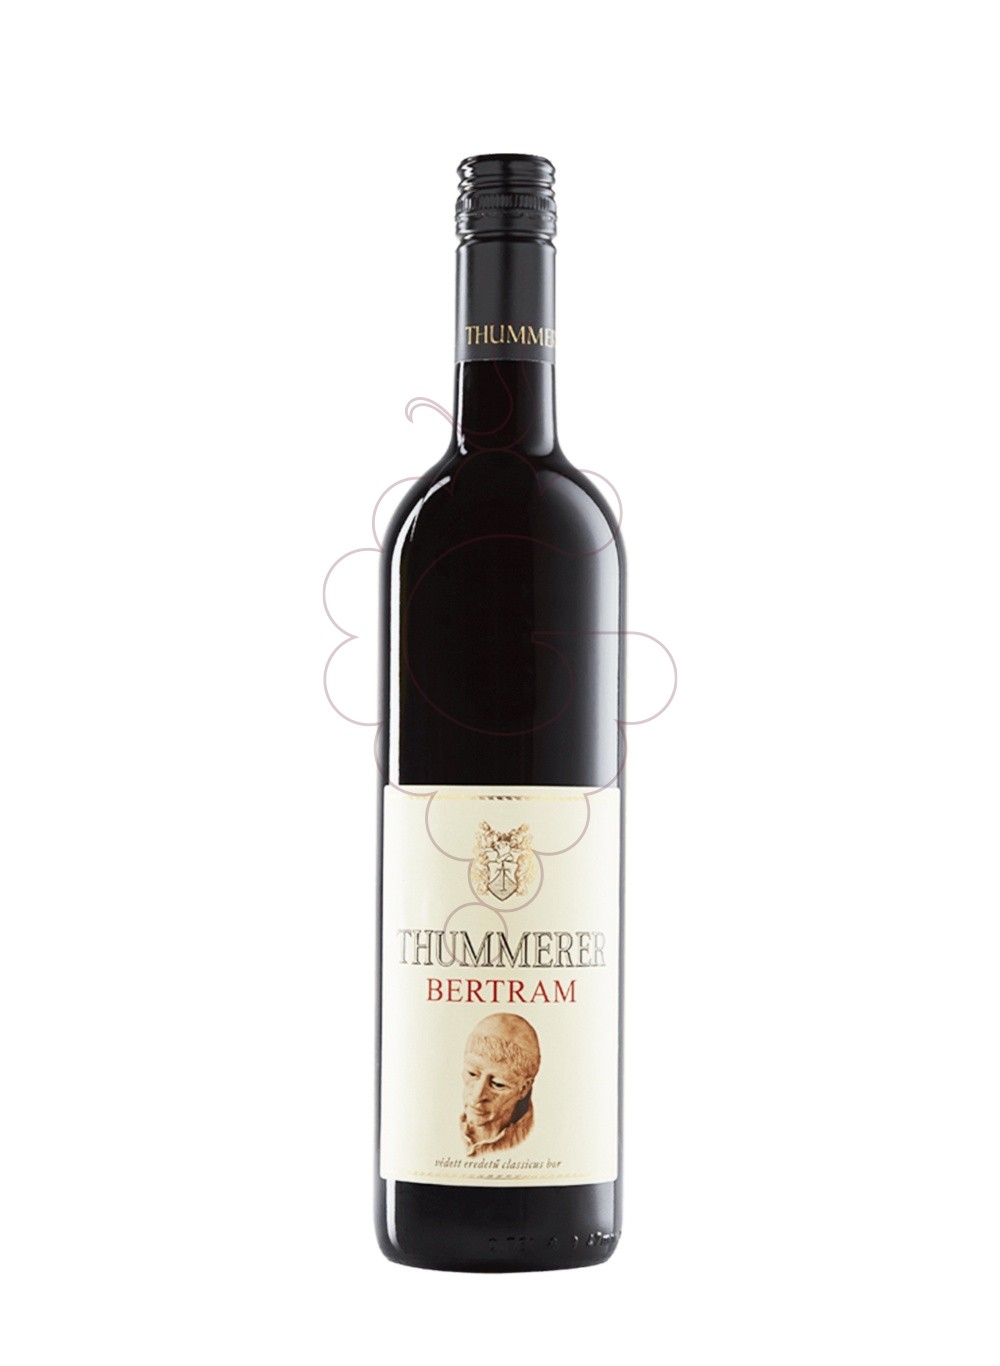 Foto Thummerer bertram 75 cl vino tinto